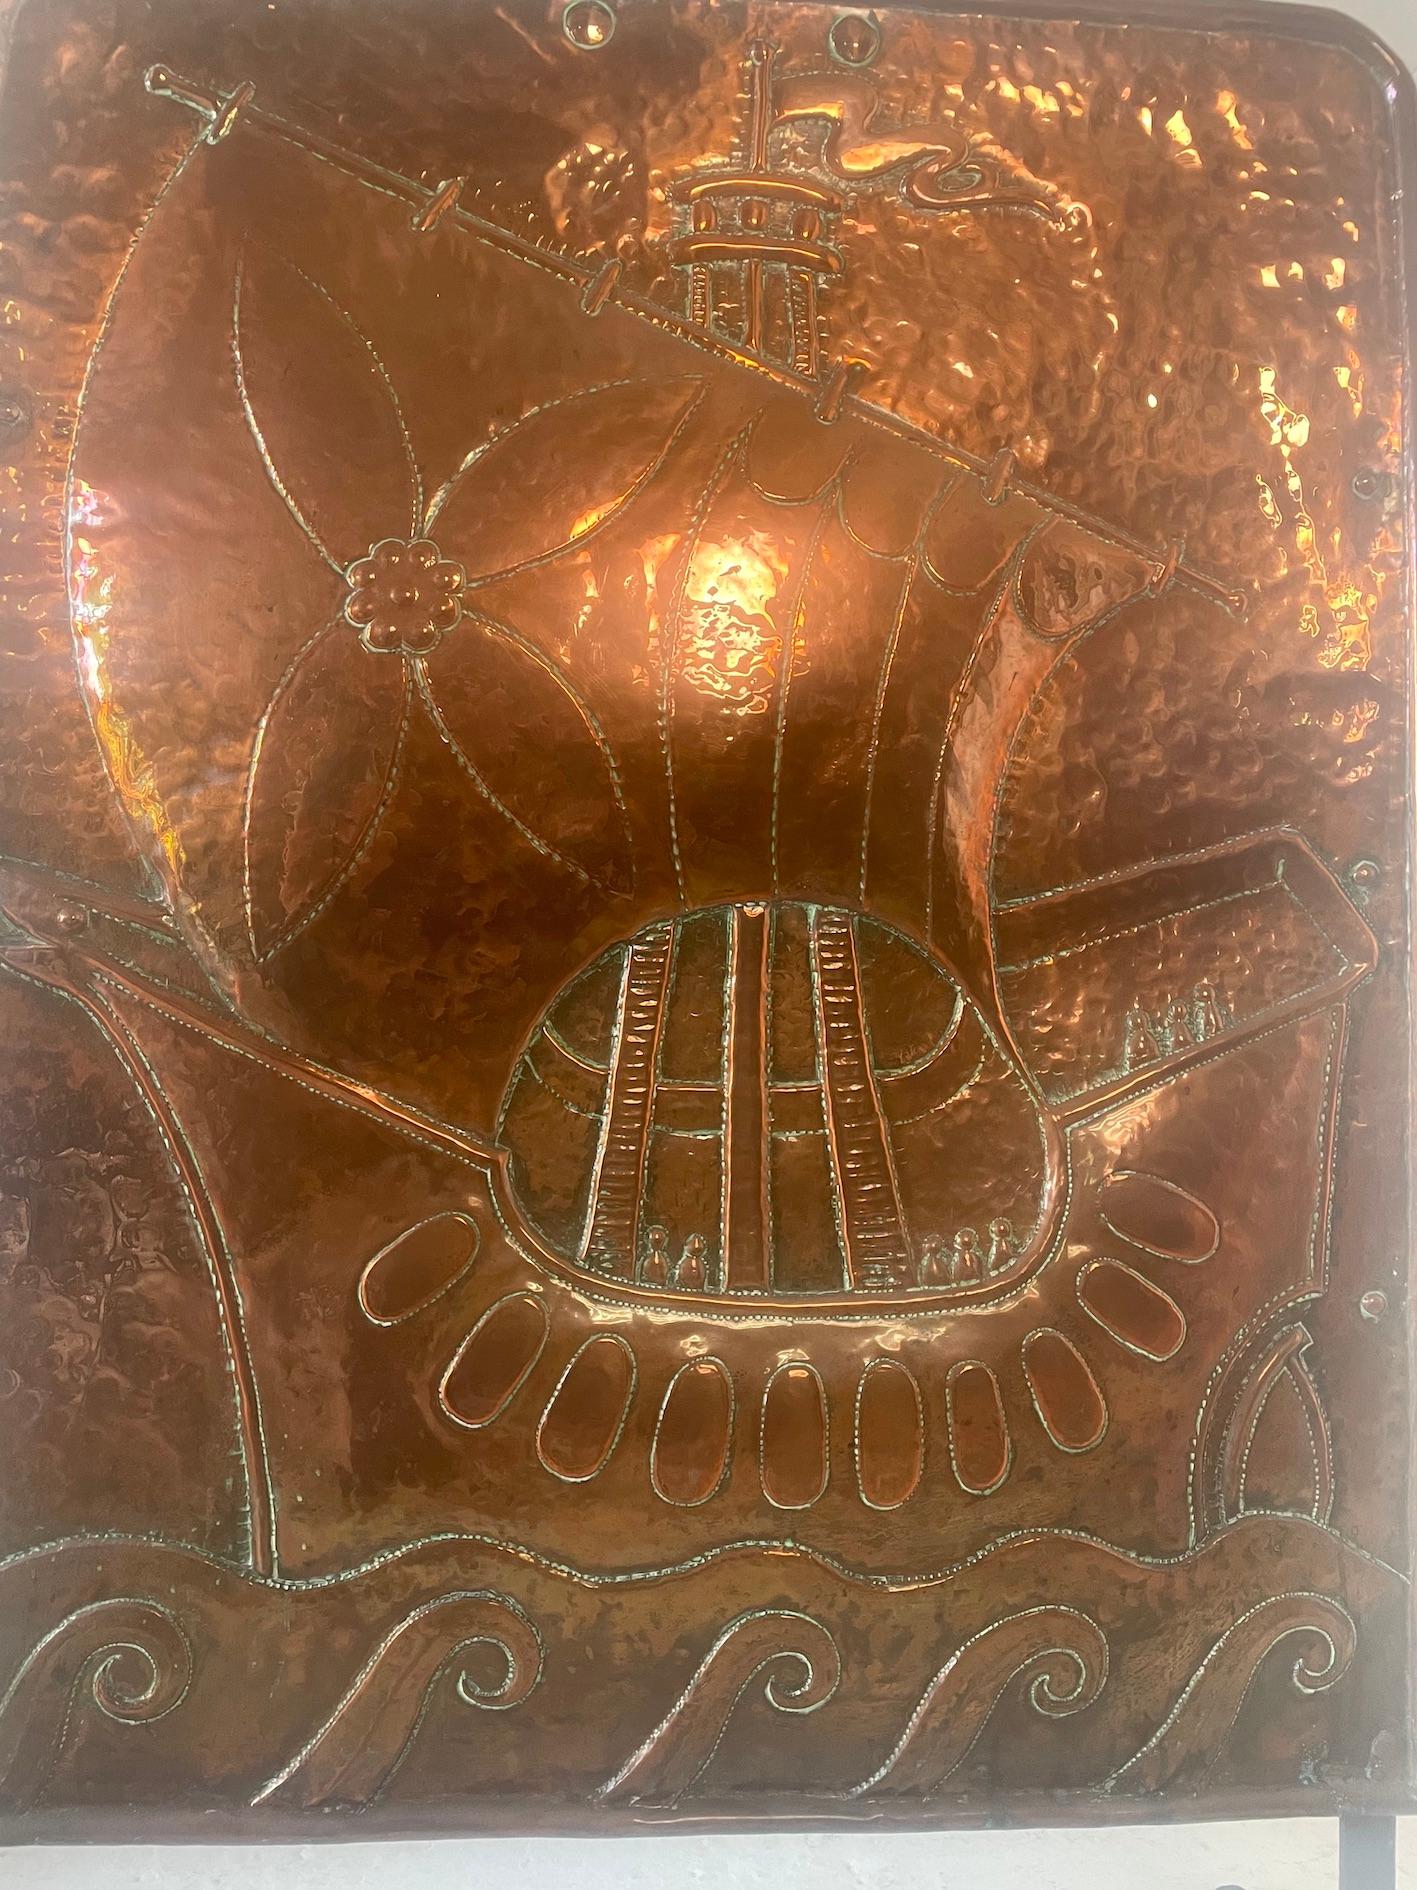 Arts & Crafts magnificent large copper fire screen

Depicting galleon at sea

Maker /Designer John Pearson (1859-1930)

Circa 1905

John Pearson was an Arts and Crafts designer maker, a founder member of C.R. Ashbee’s Guild of Handicrafts